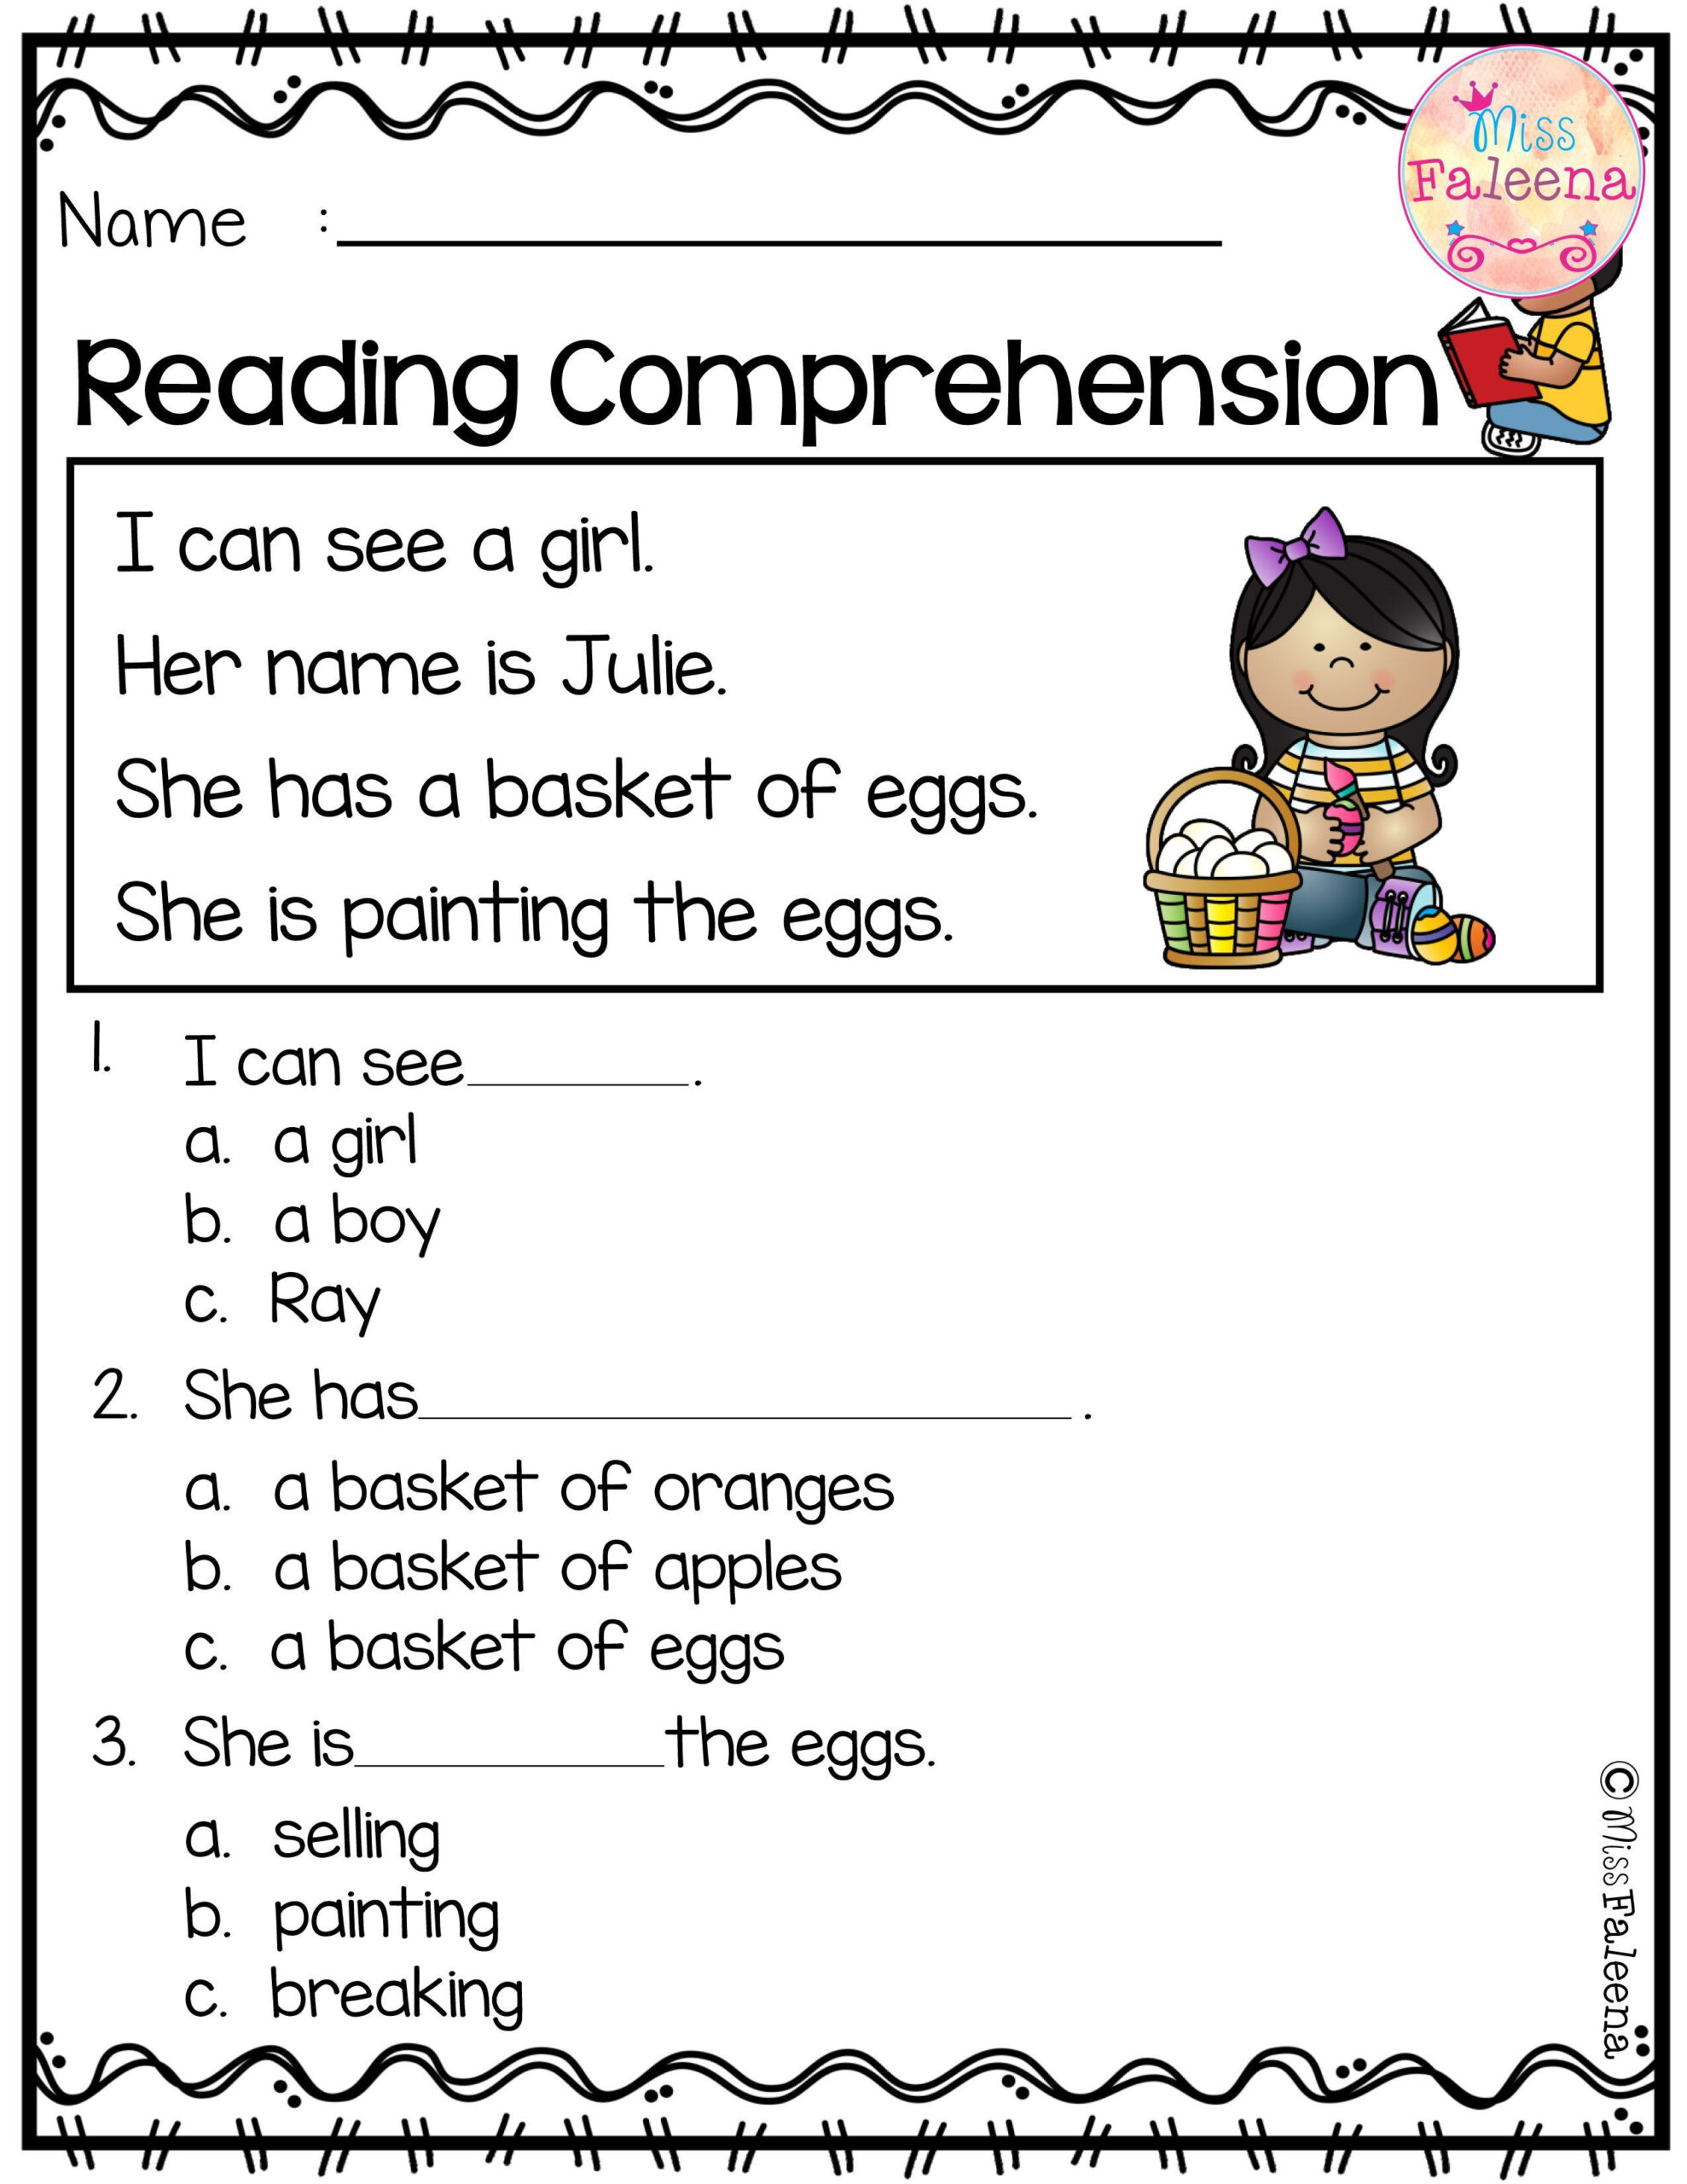 April Reading Comprehension Is Suitable For Kindergarten Students Or 